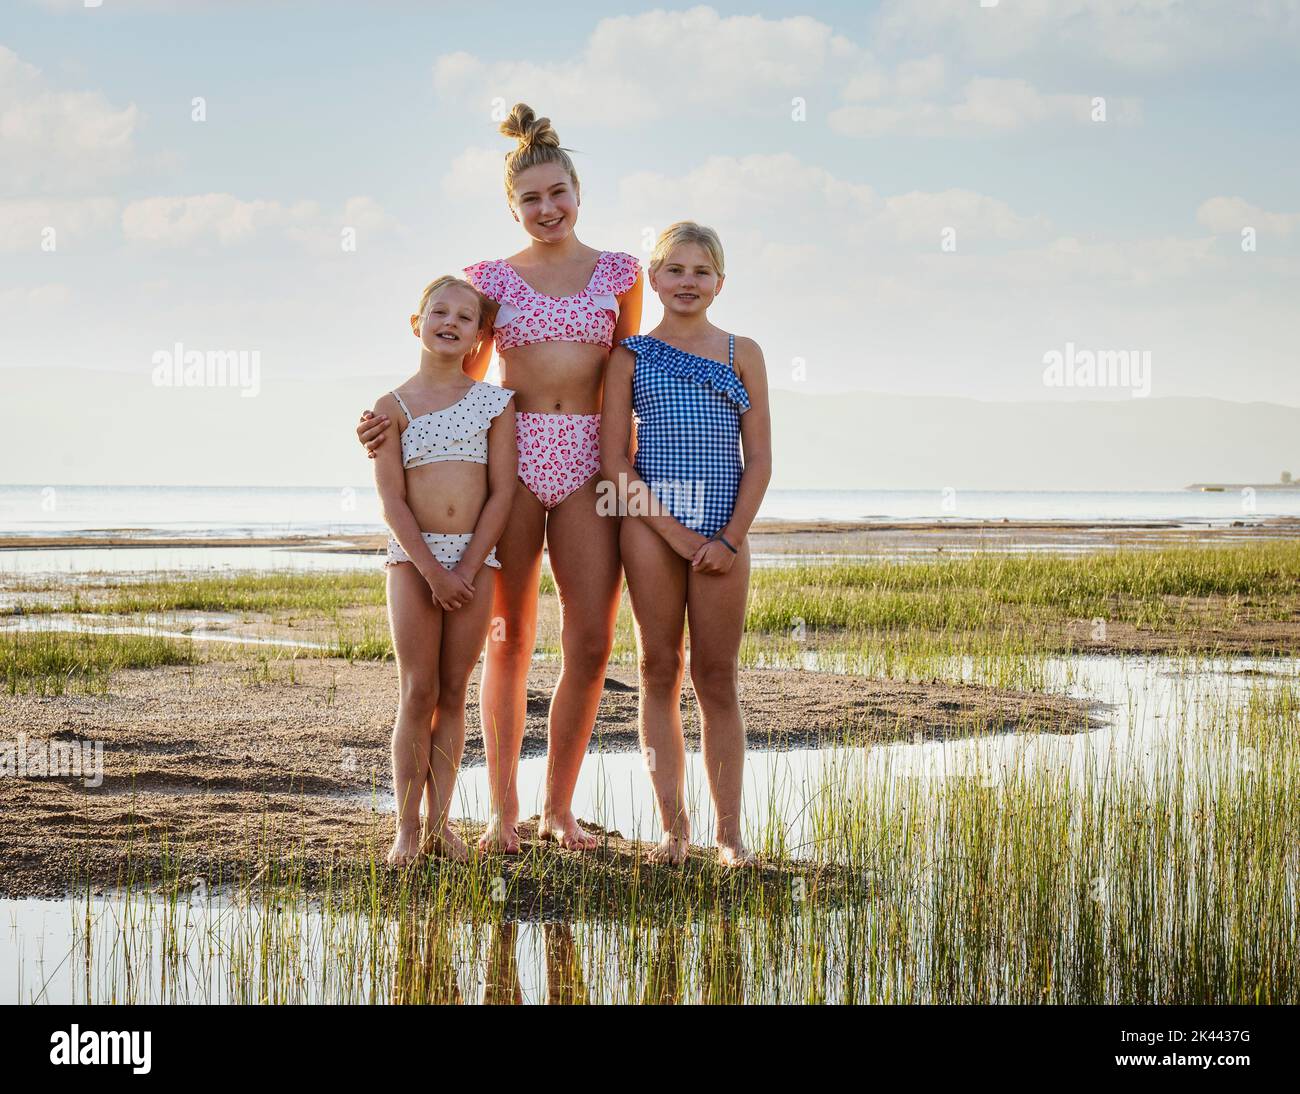 Teen girls bikini hi-res stock photography and images - Alamy